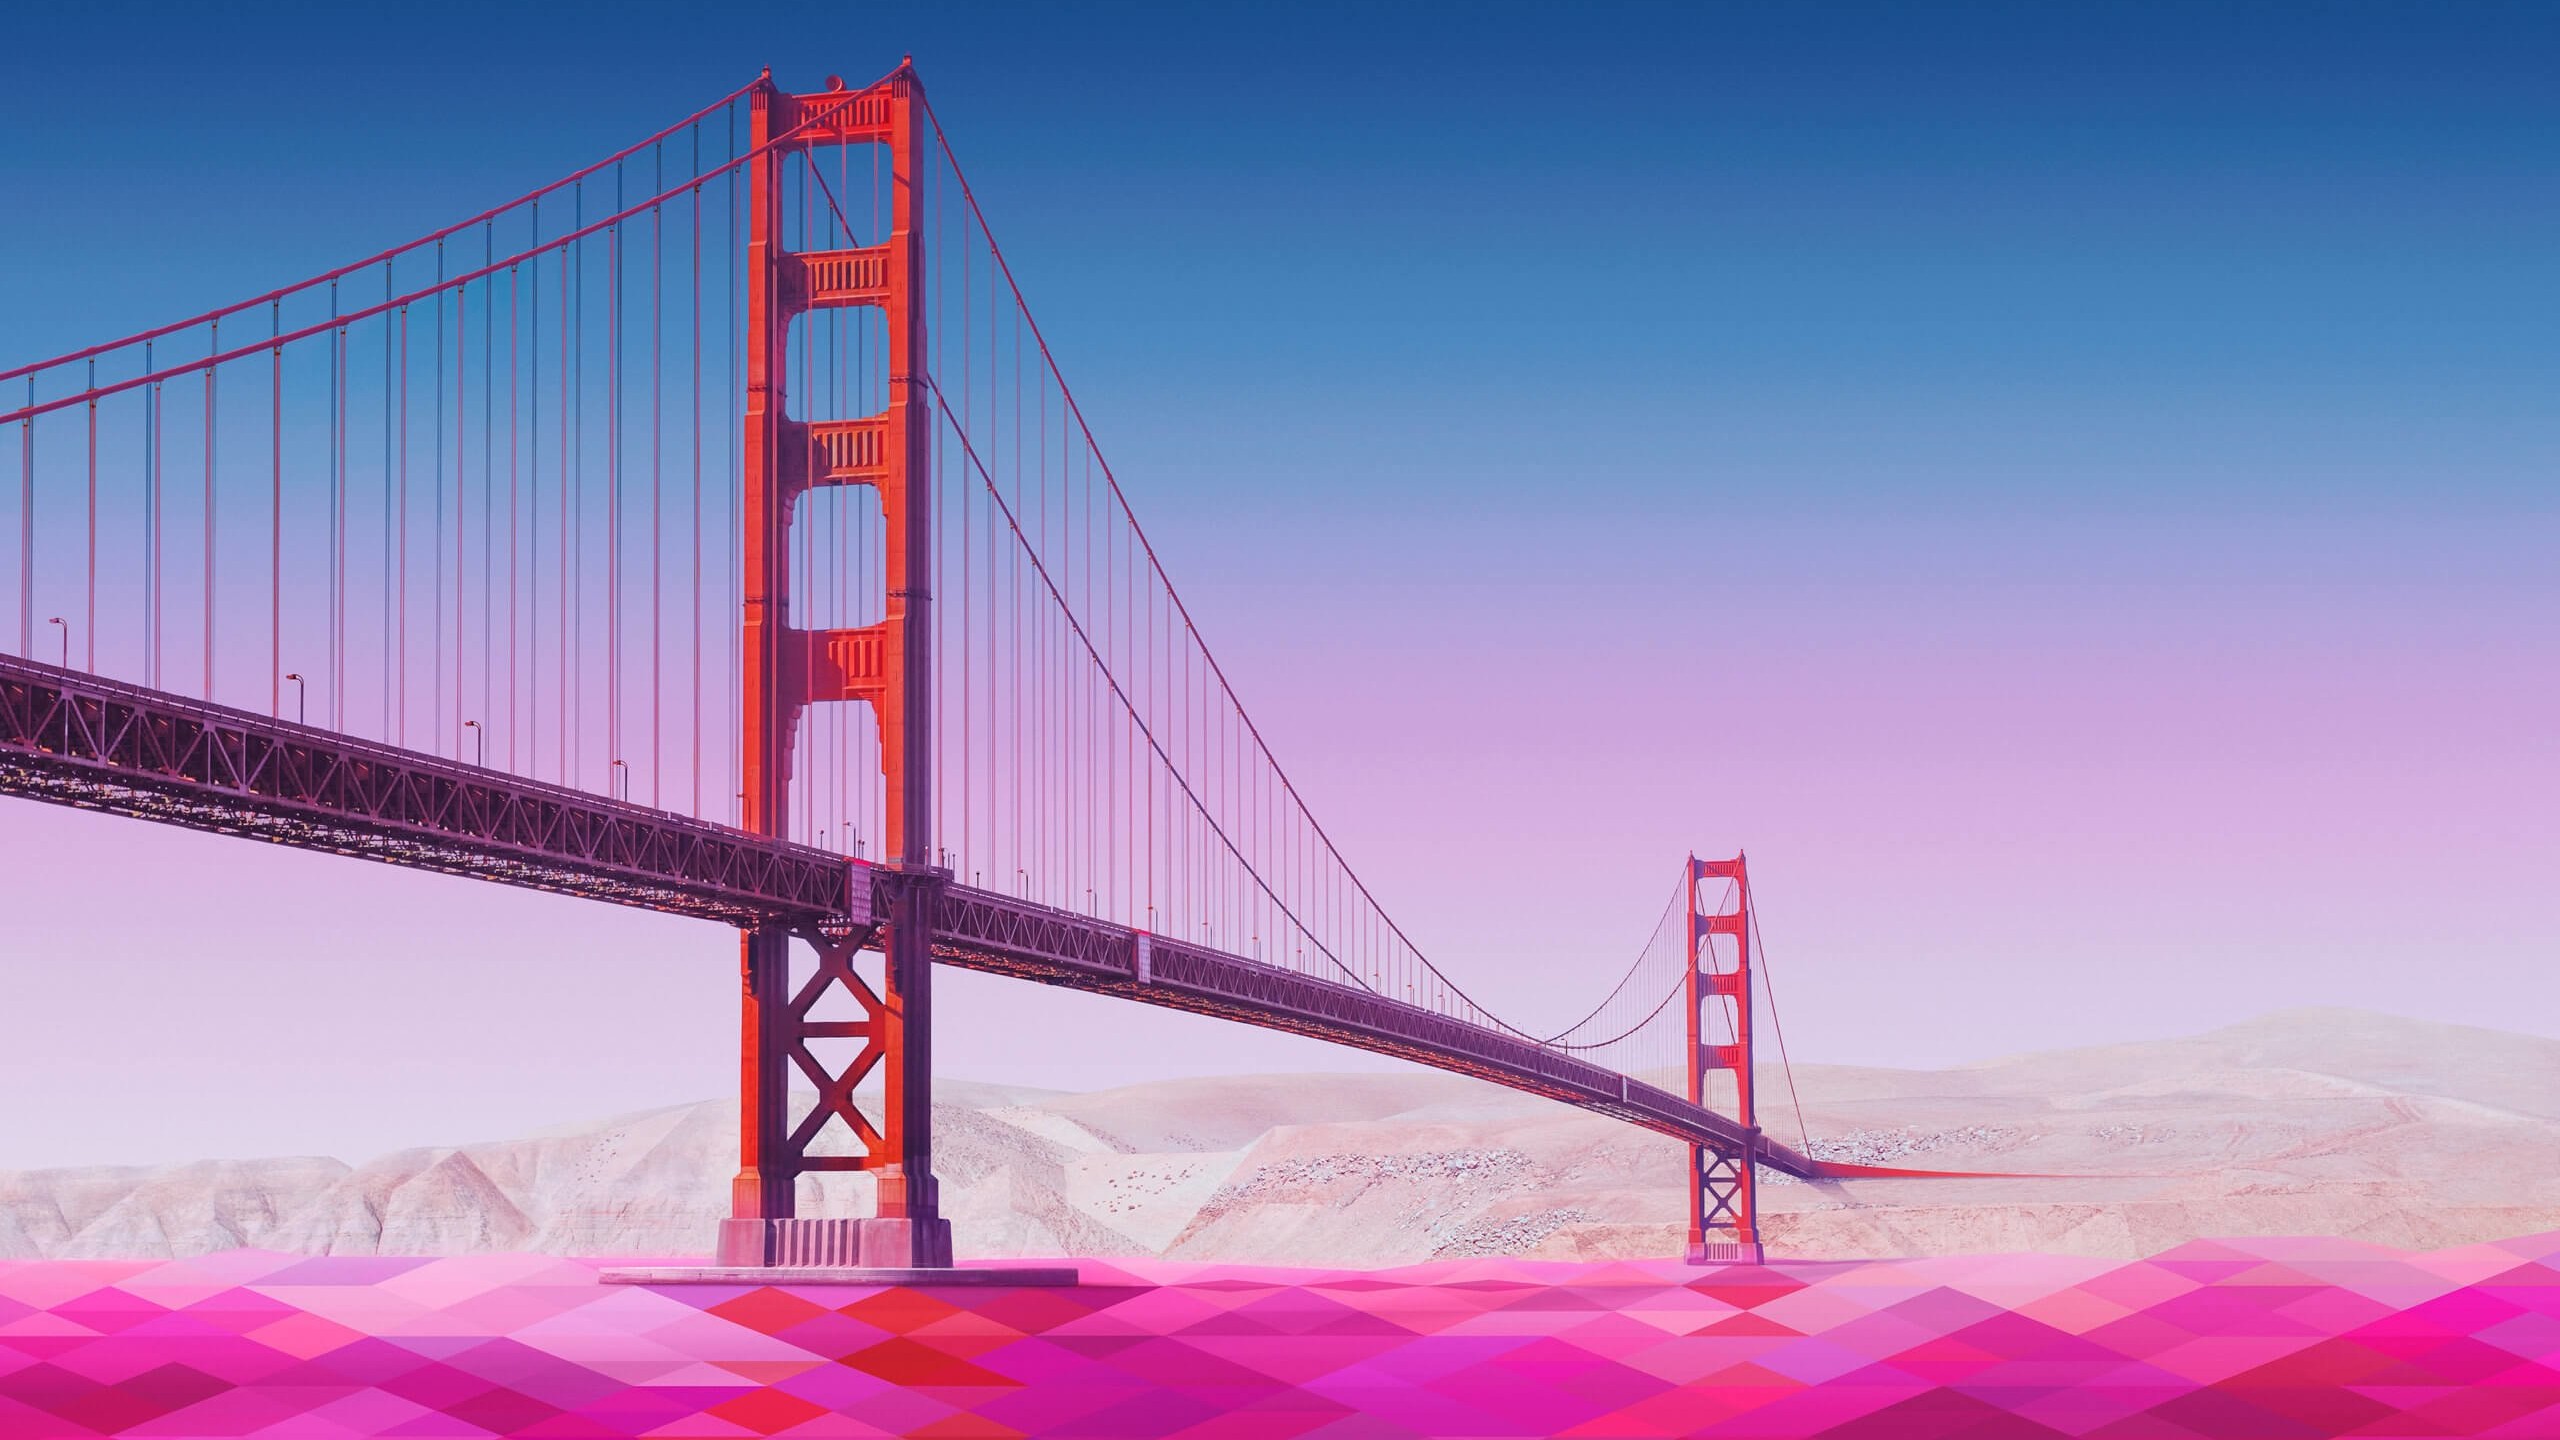 Geometric Golden Gate Bridge Wallpaper for Desktop 2560x1440